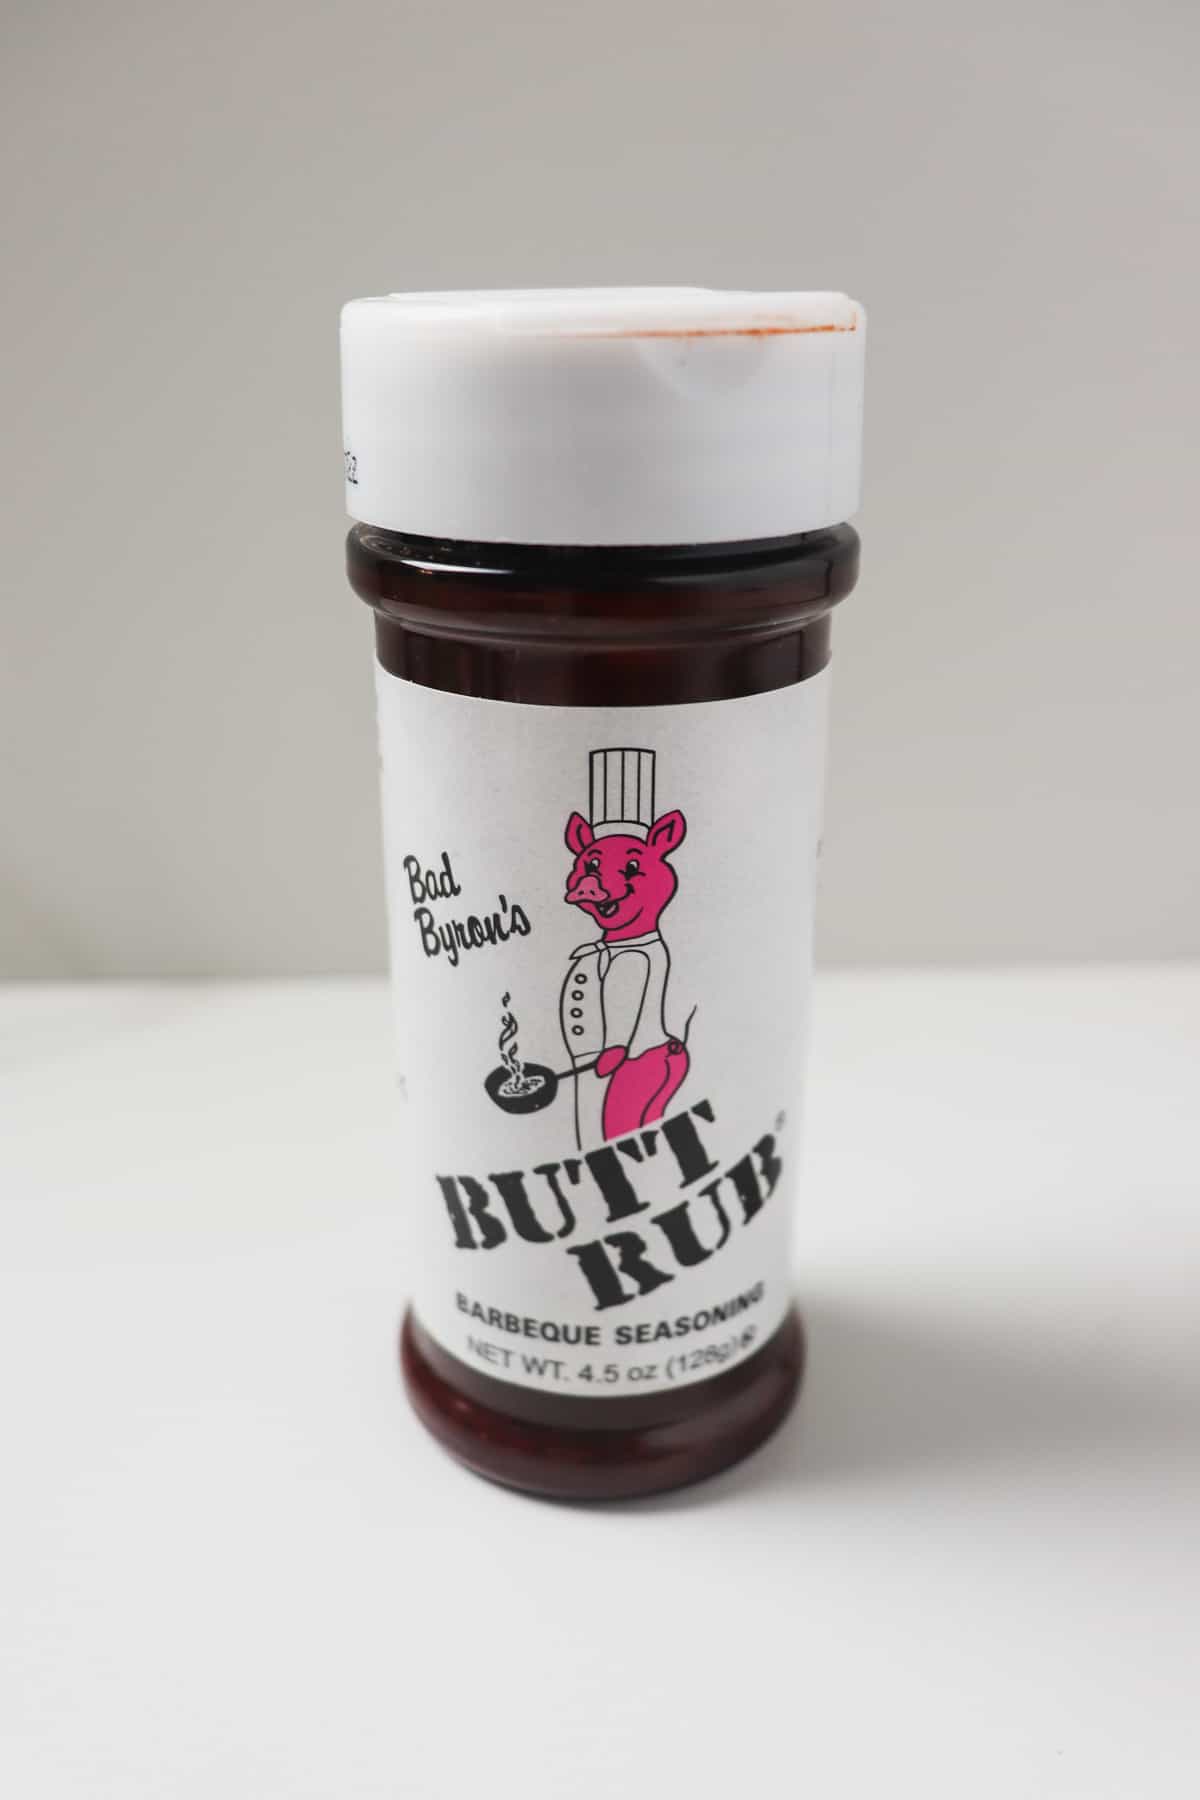 butt rub seasoning